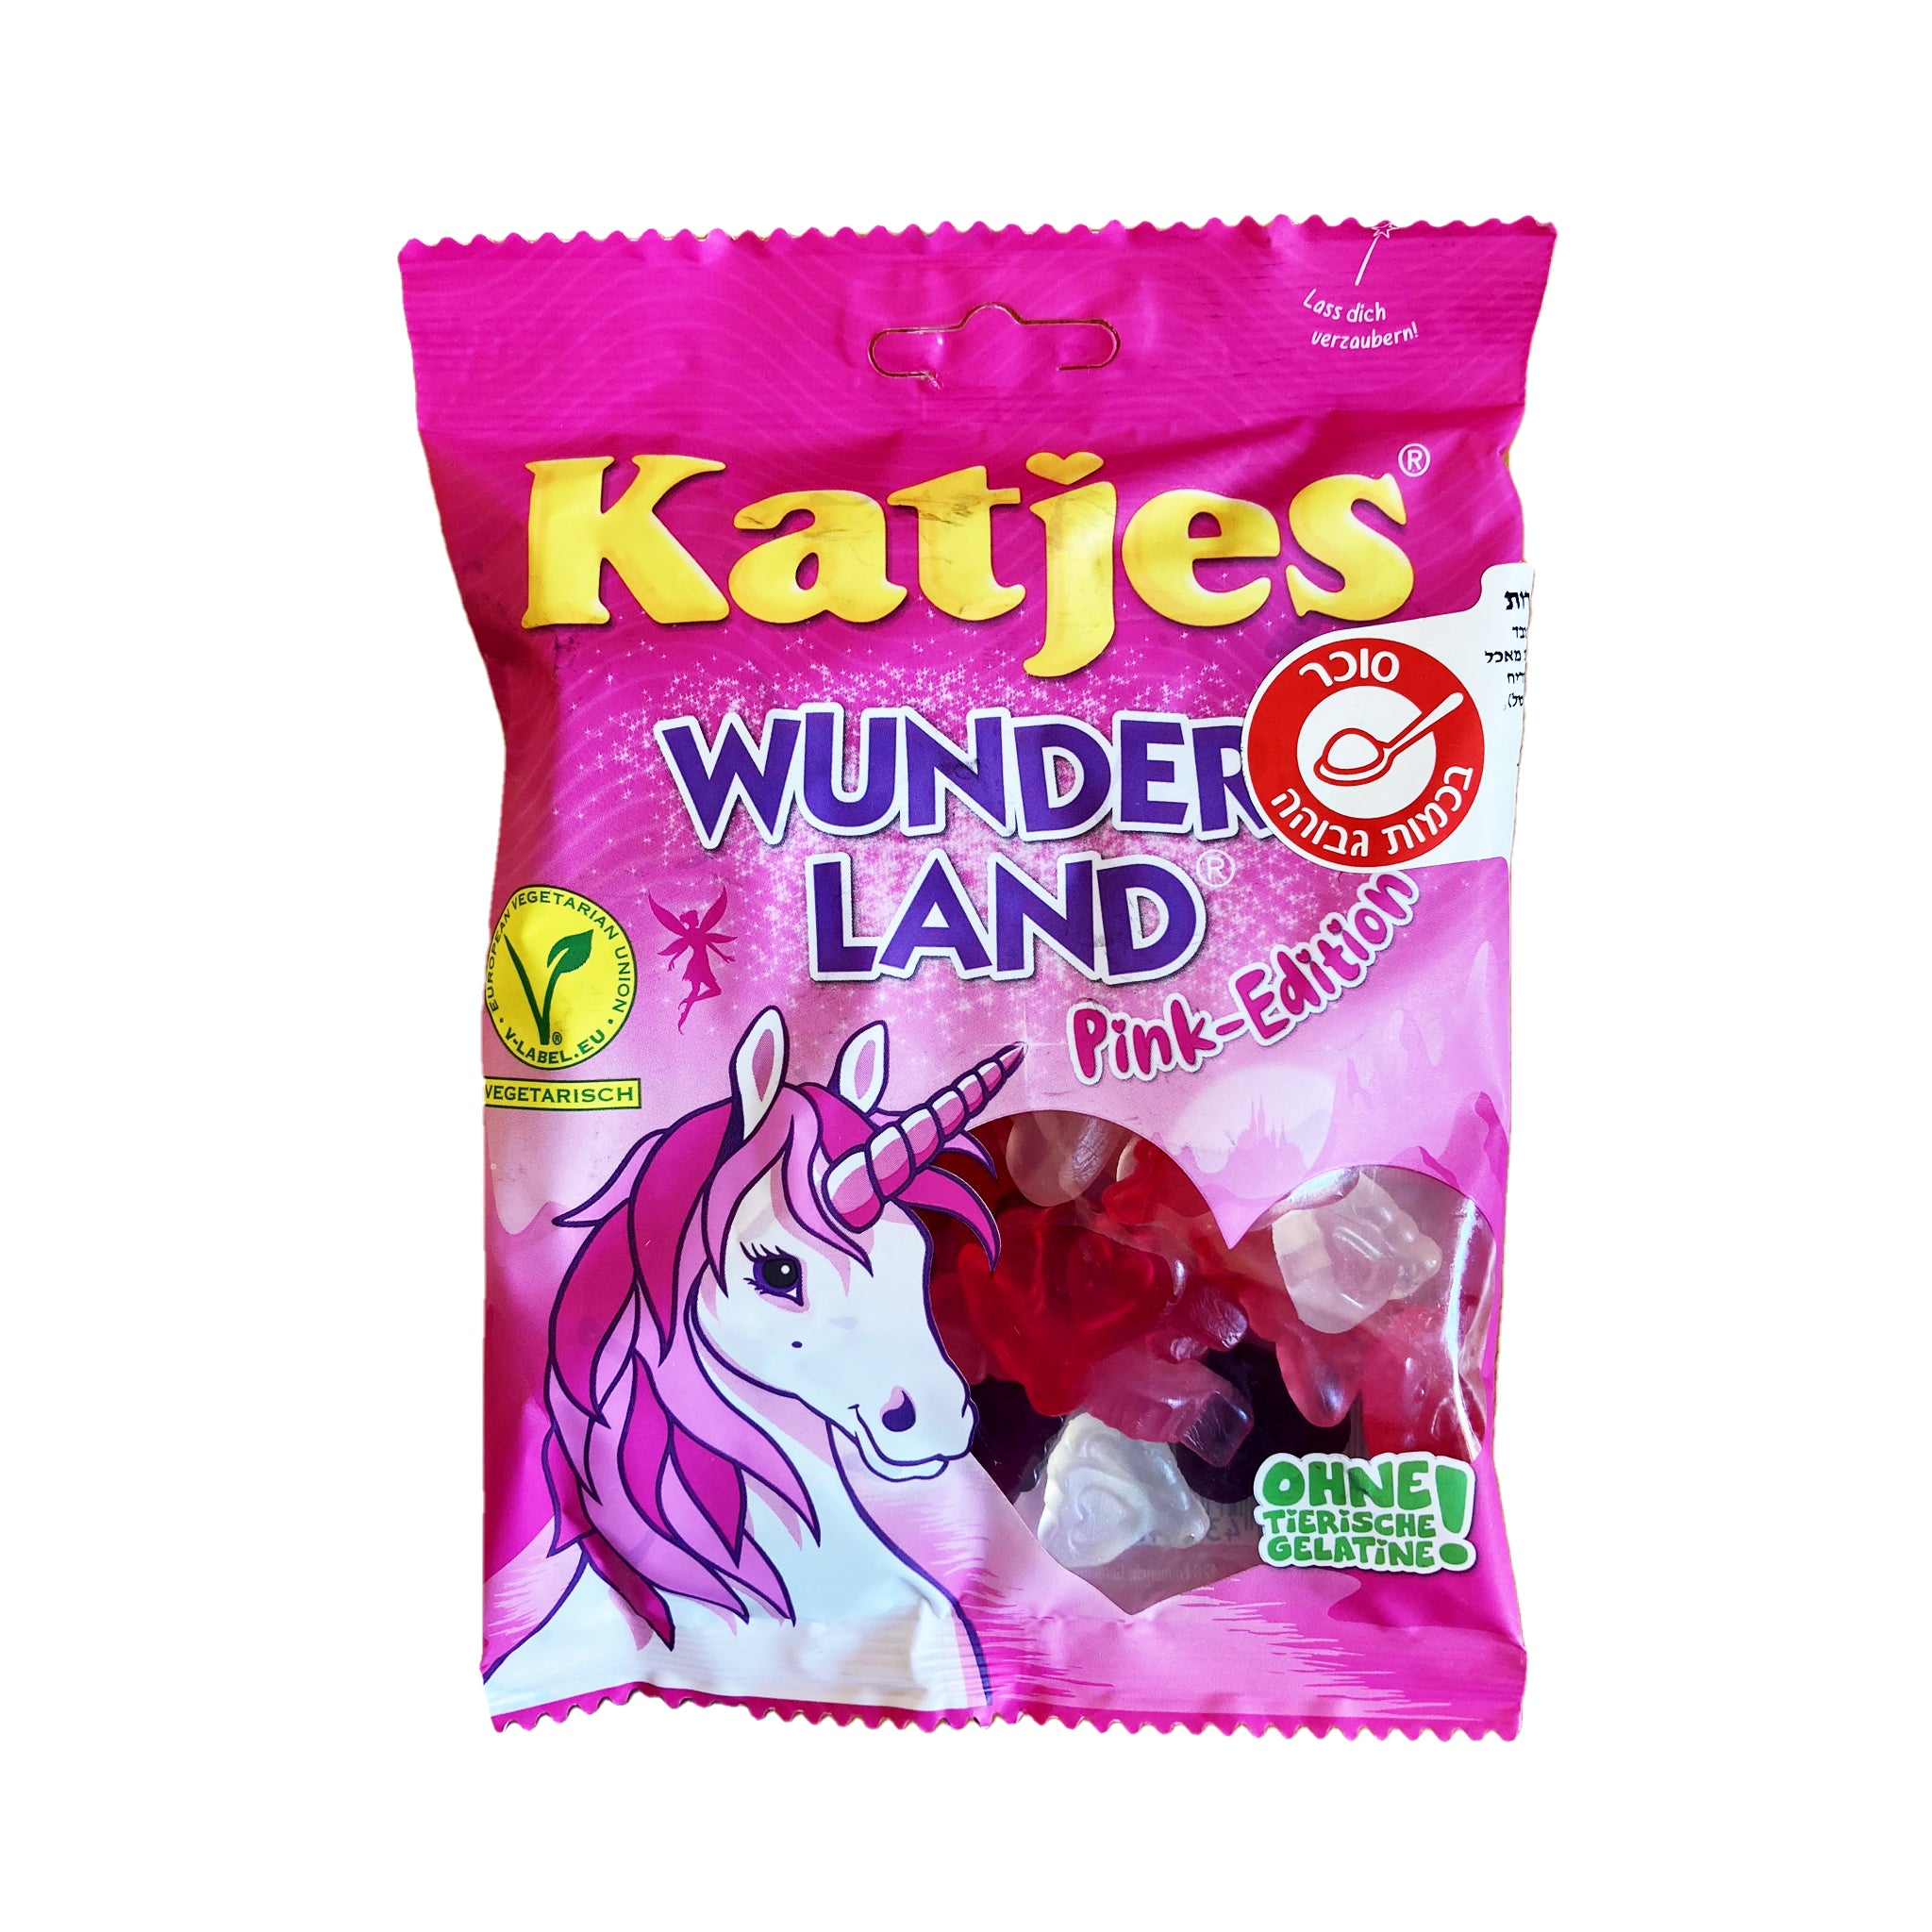 Katjes Wunder-Land Pink Edition  סוכריות קטג'טס חד קרן טעימים